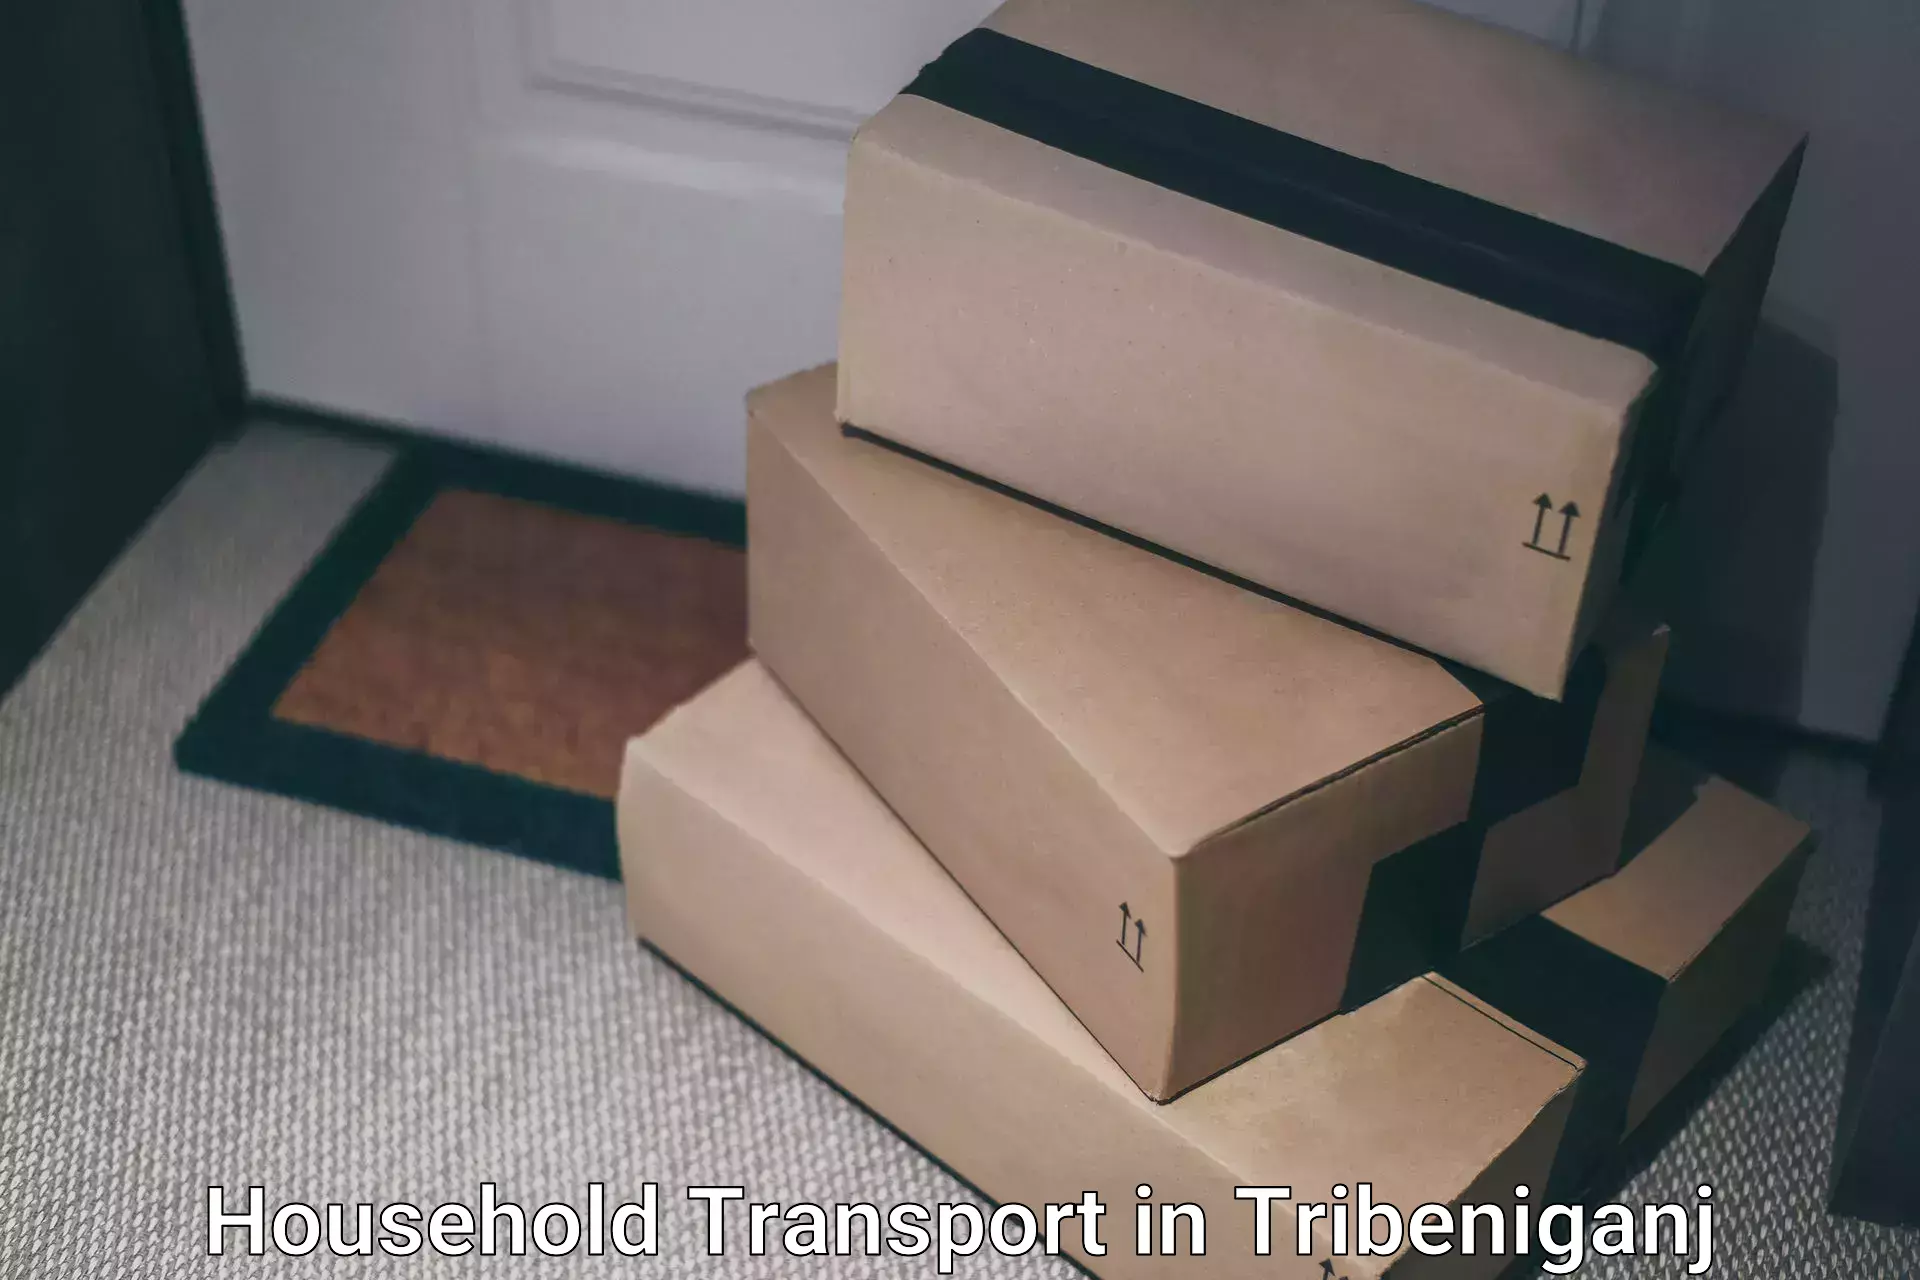 Reliable furniture movers in Tribeniganj